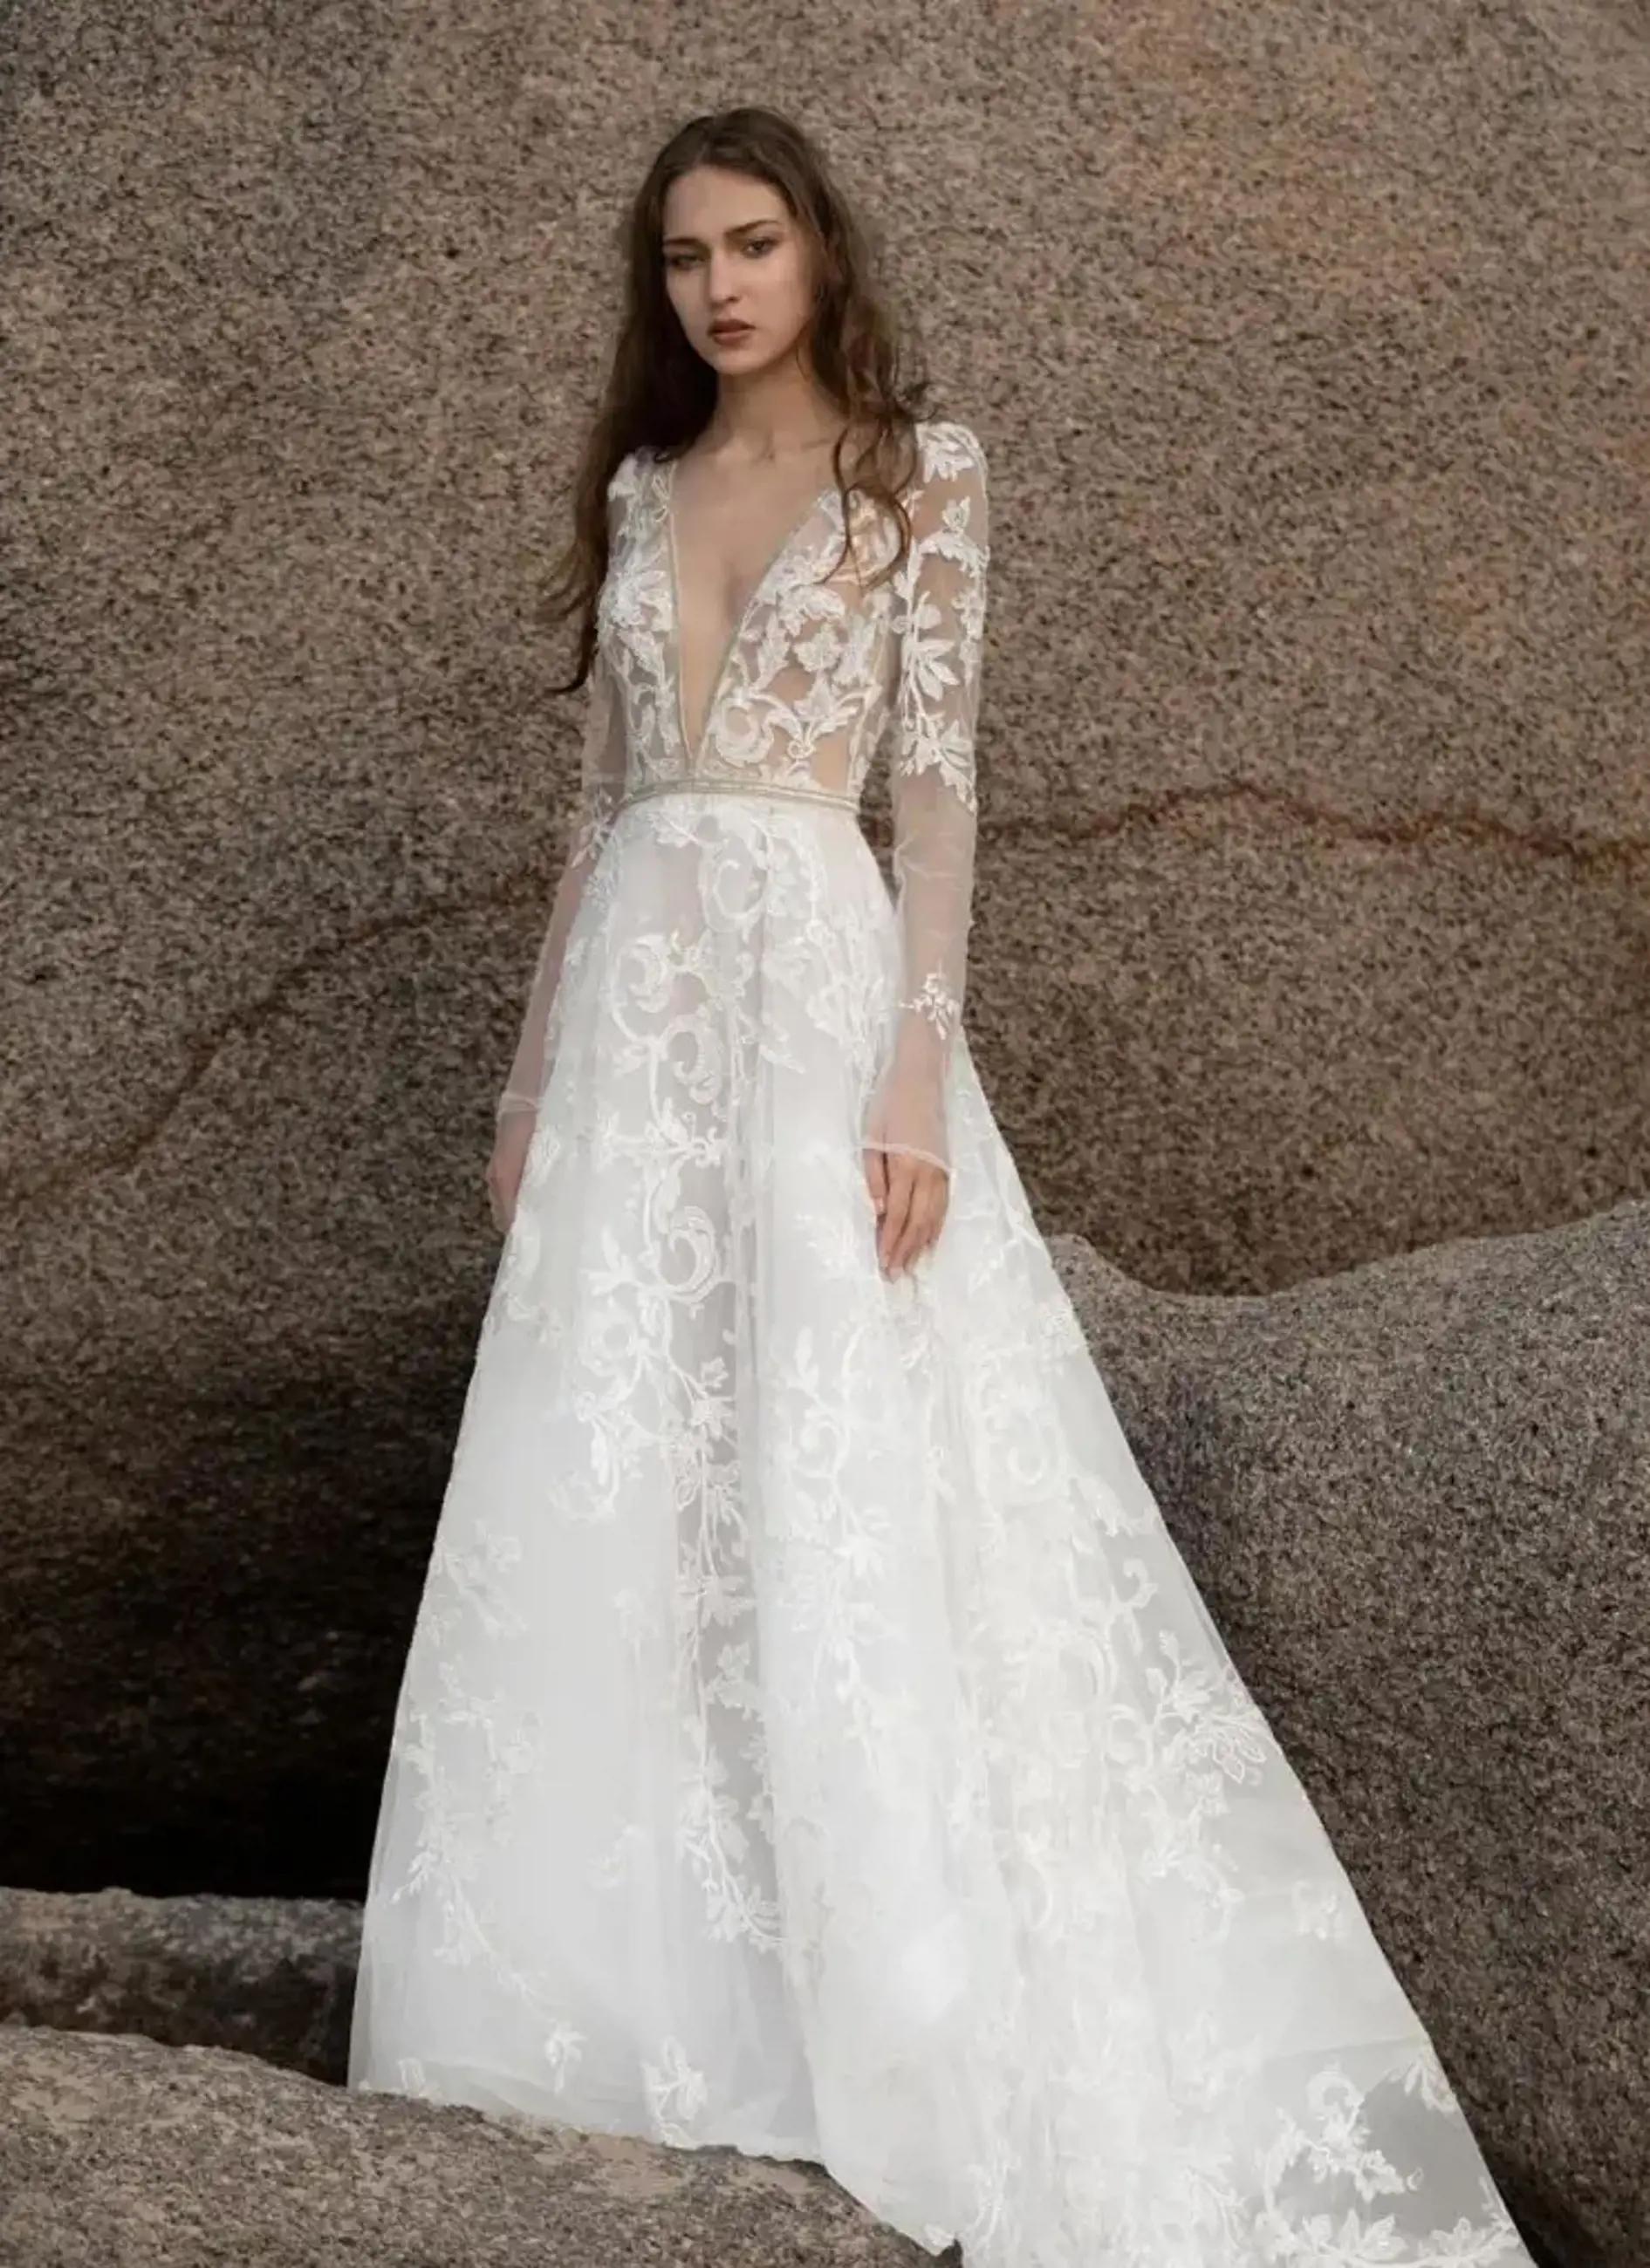 Morgan Davies Bridal Model wearing La Premier Bridal dress